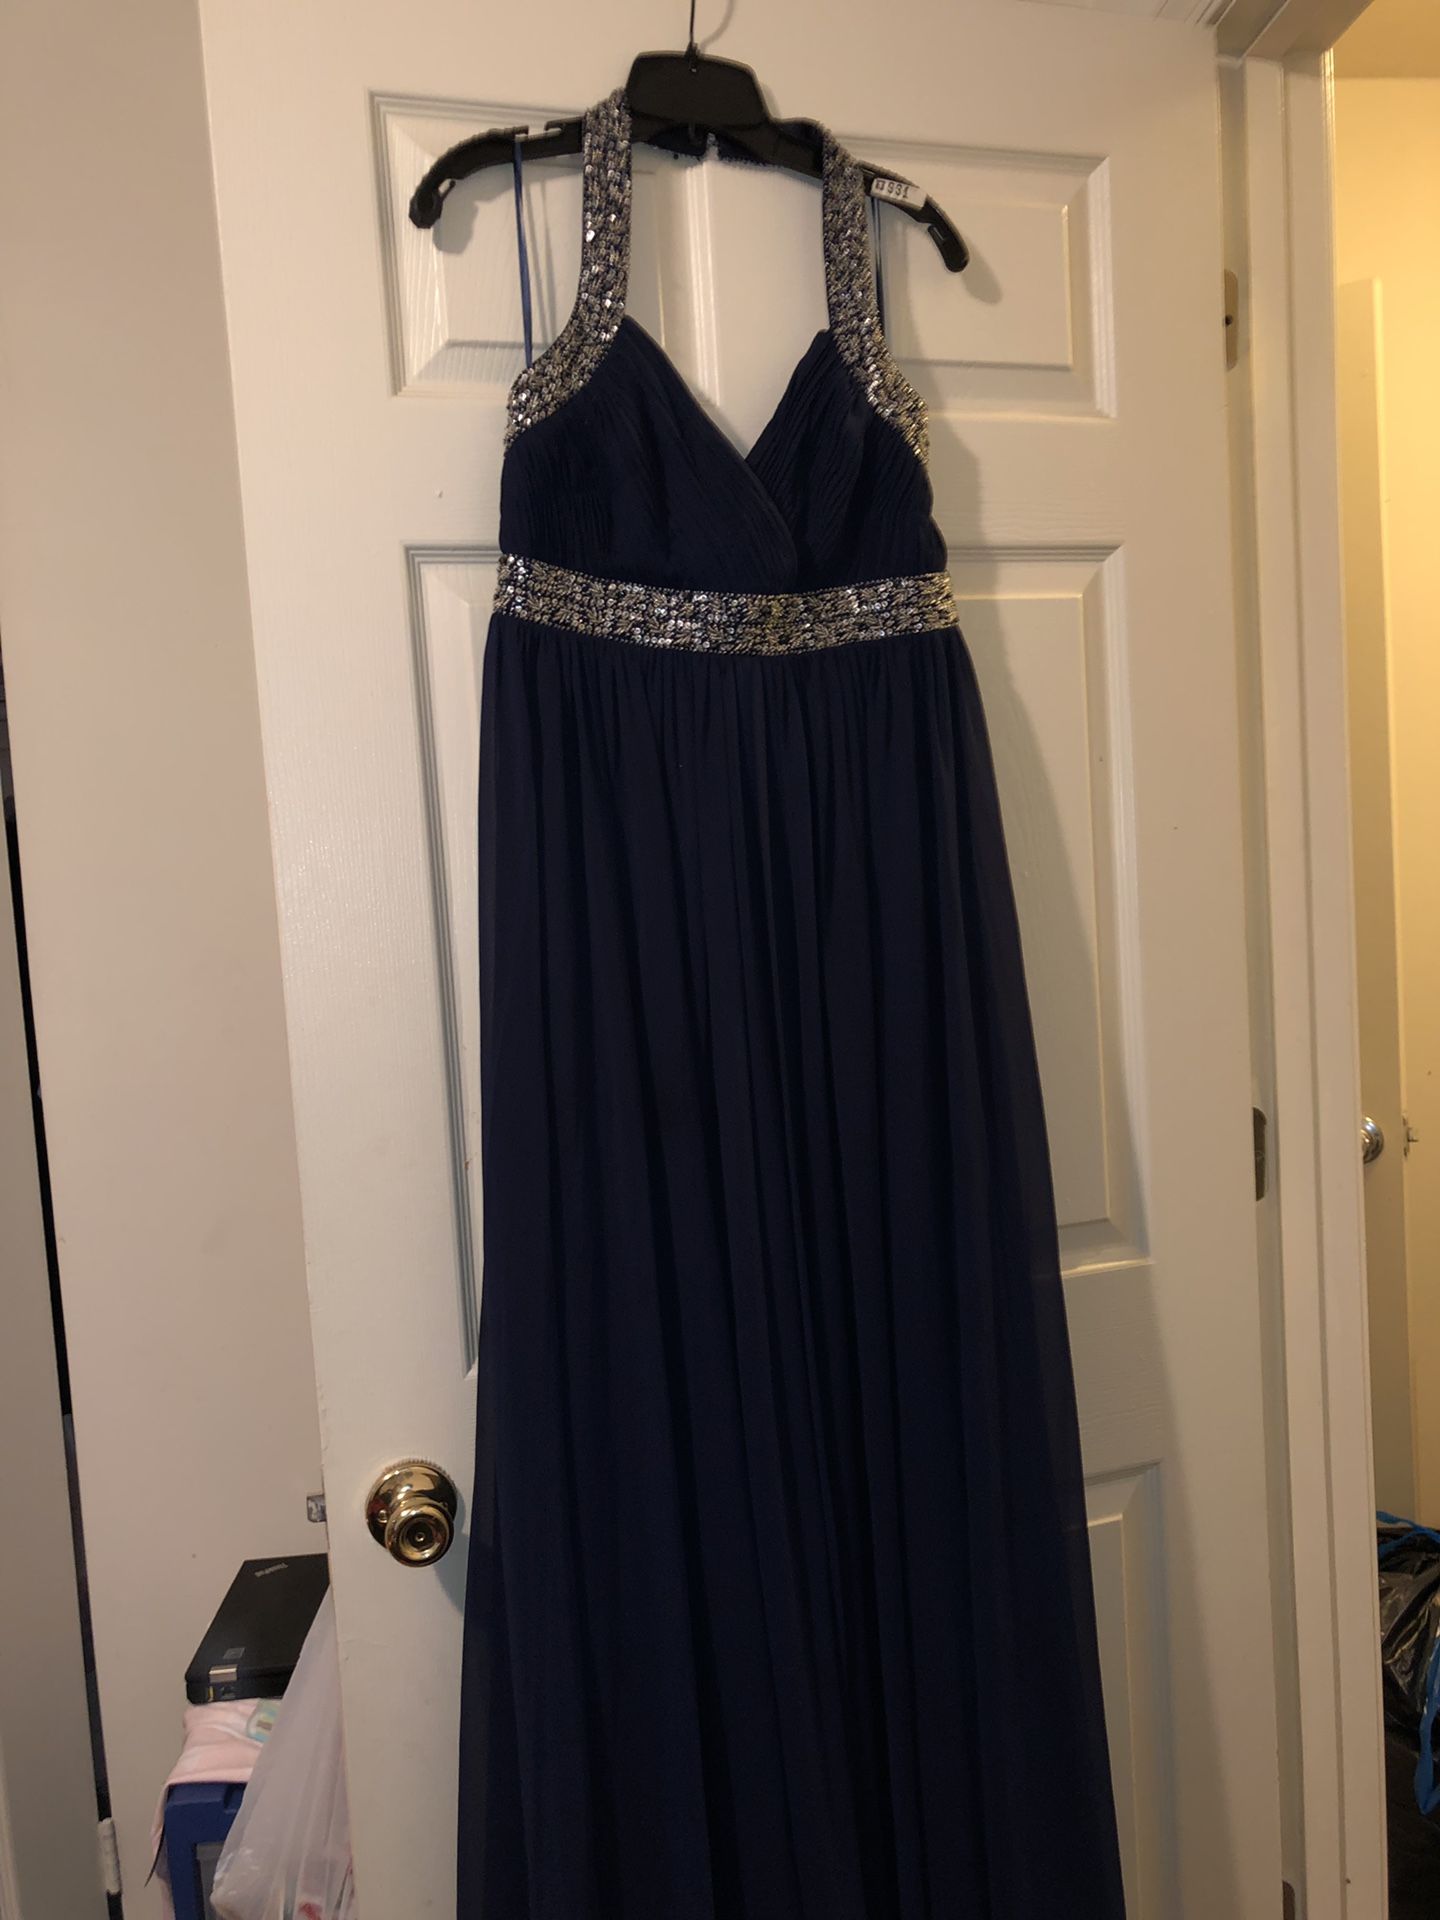 Long Navy Blue Formal Dress.